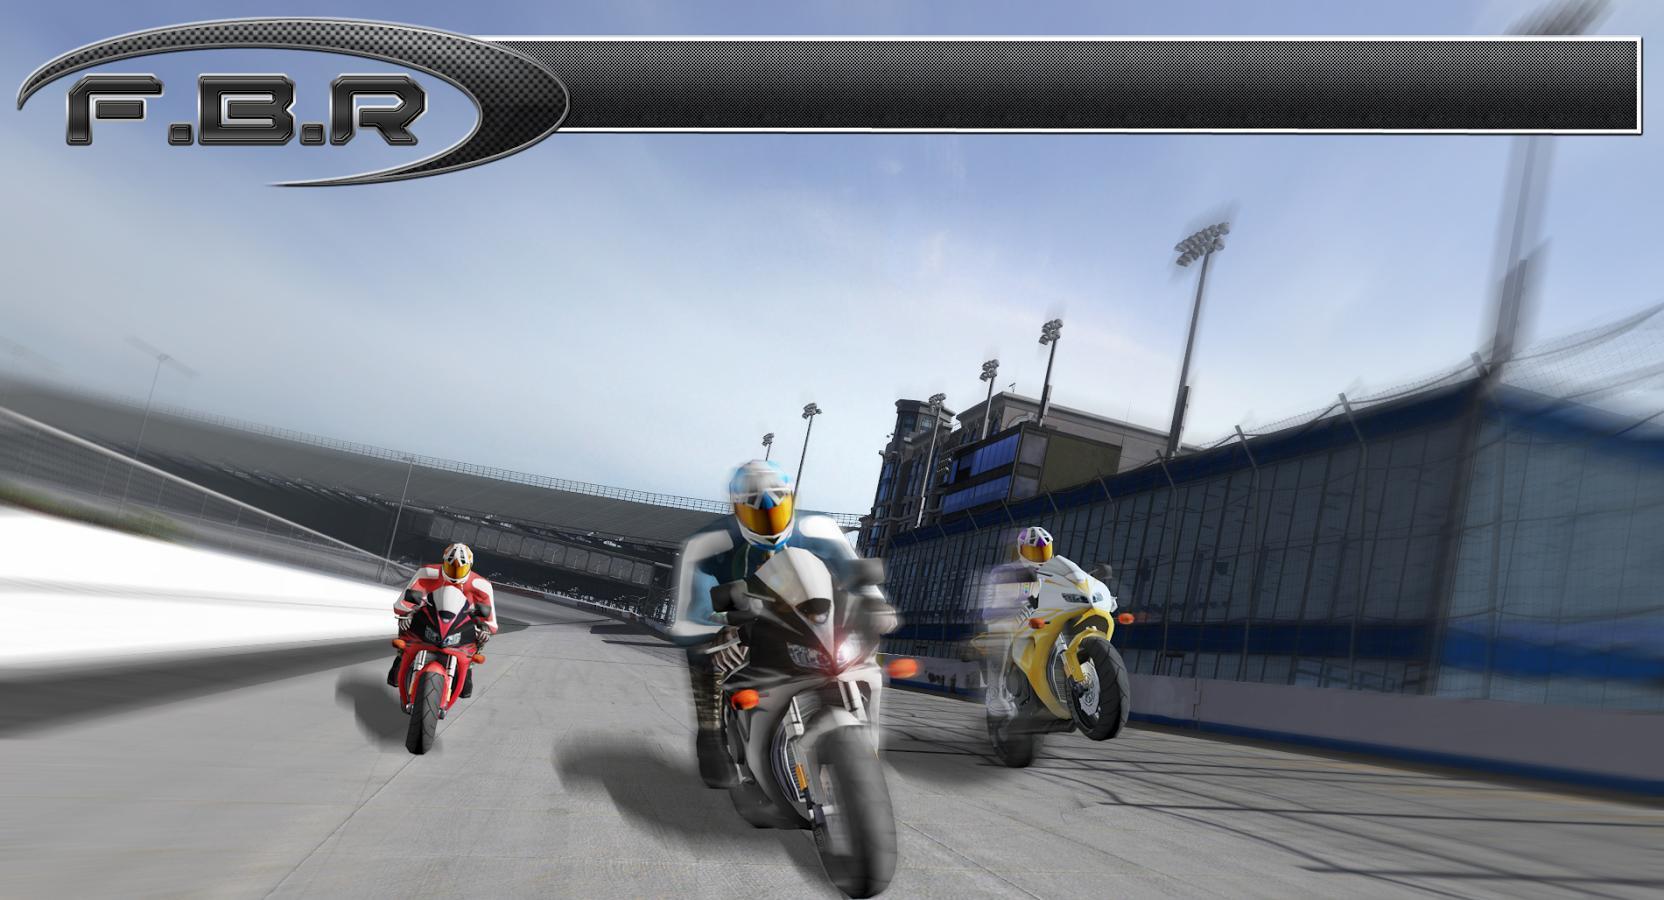 Fast Bike Race 2015 Apps on Google Play